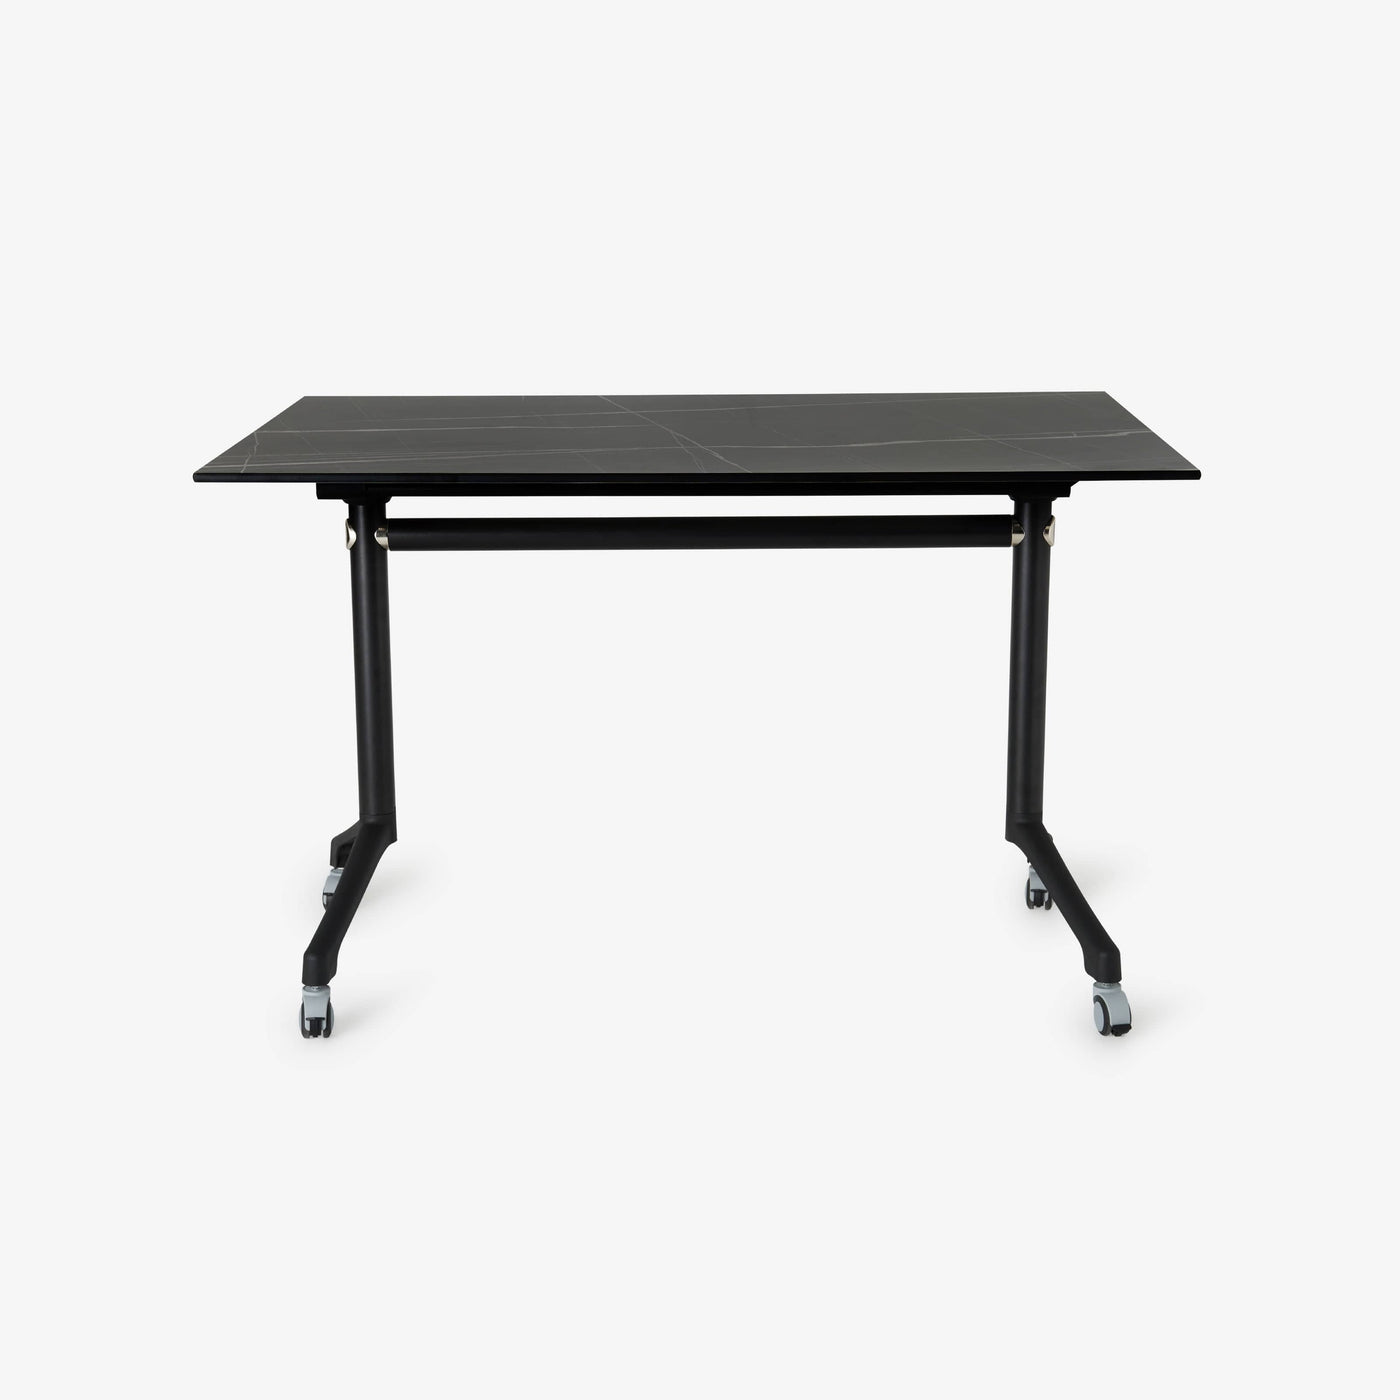 Snap Marble Table, Black, 120x80x69 cm - 3